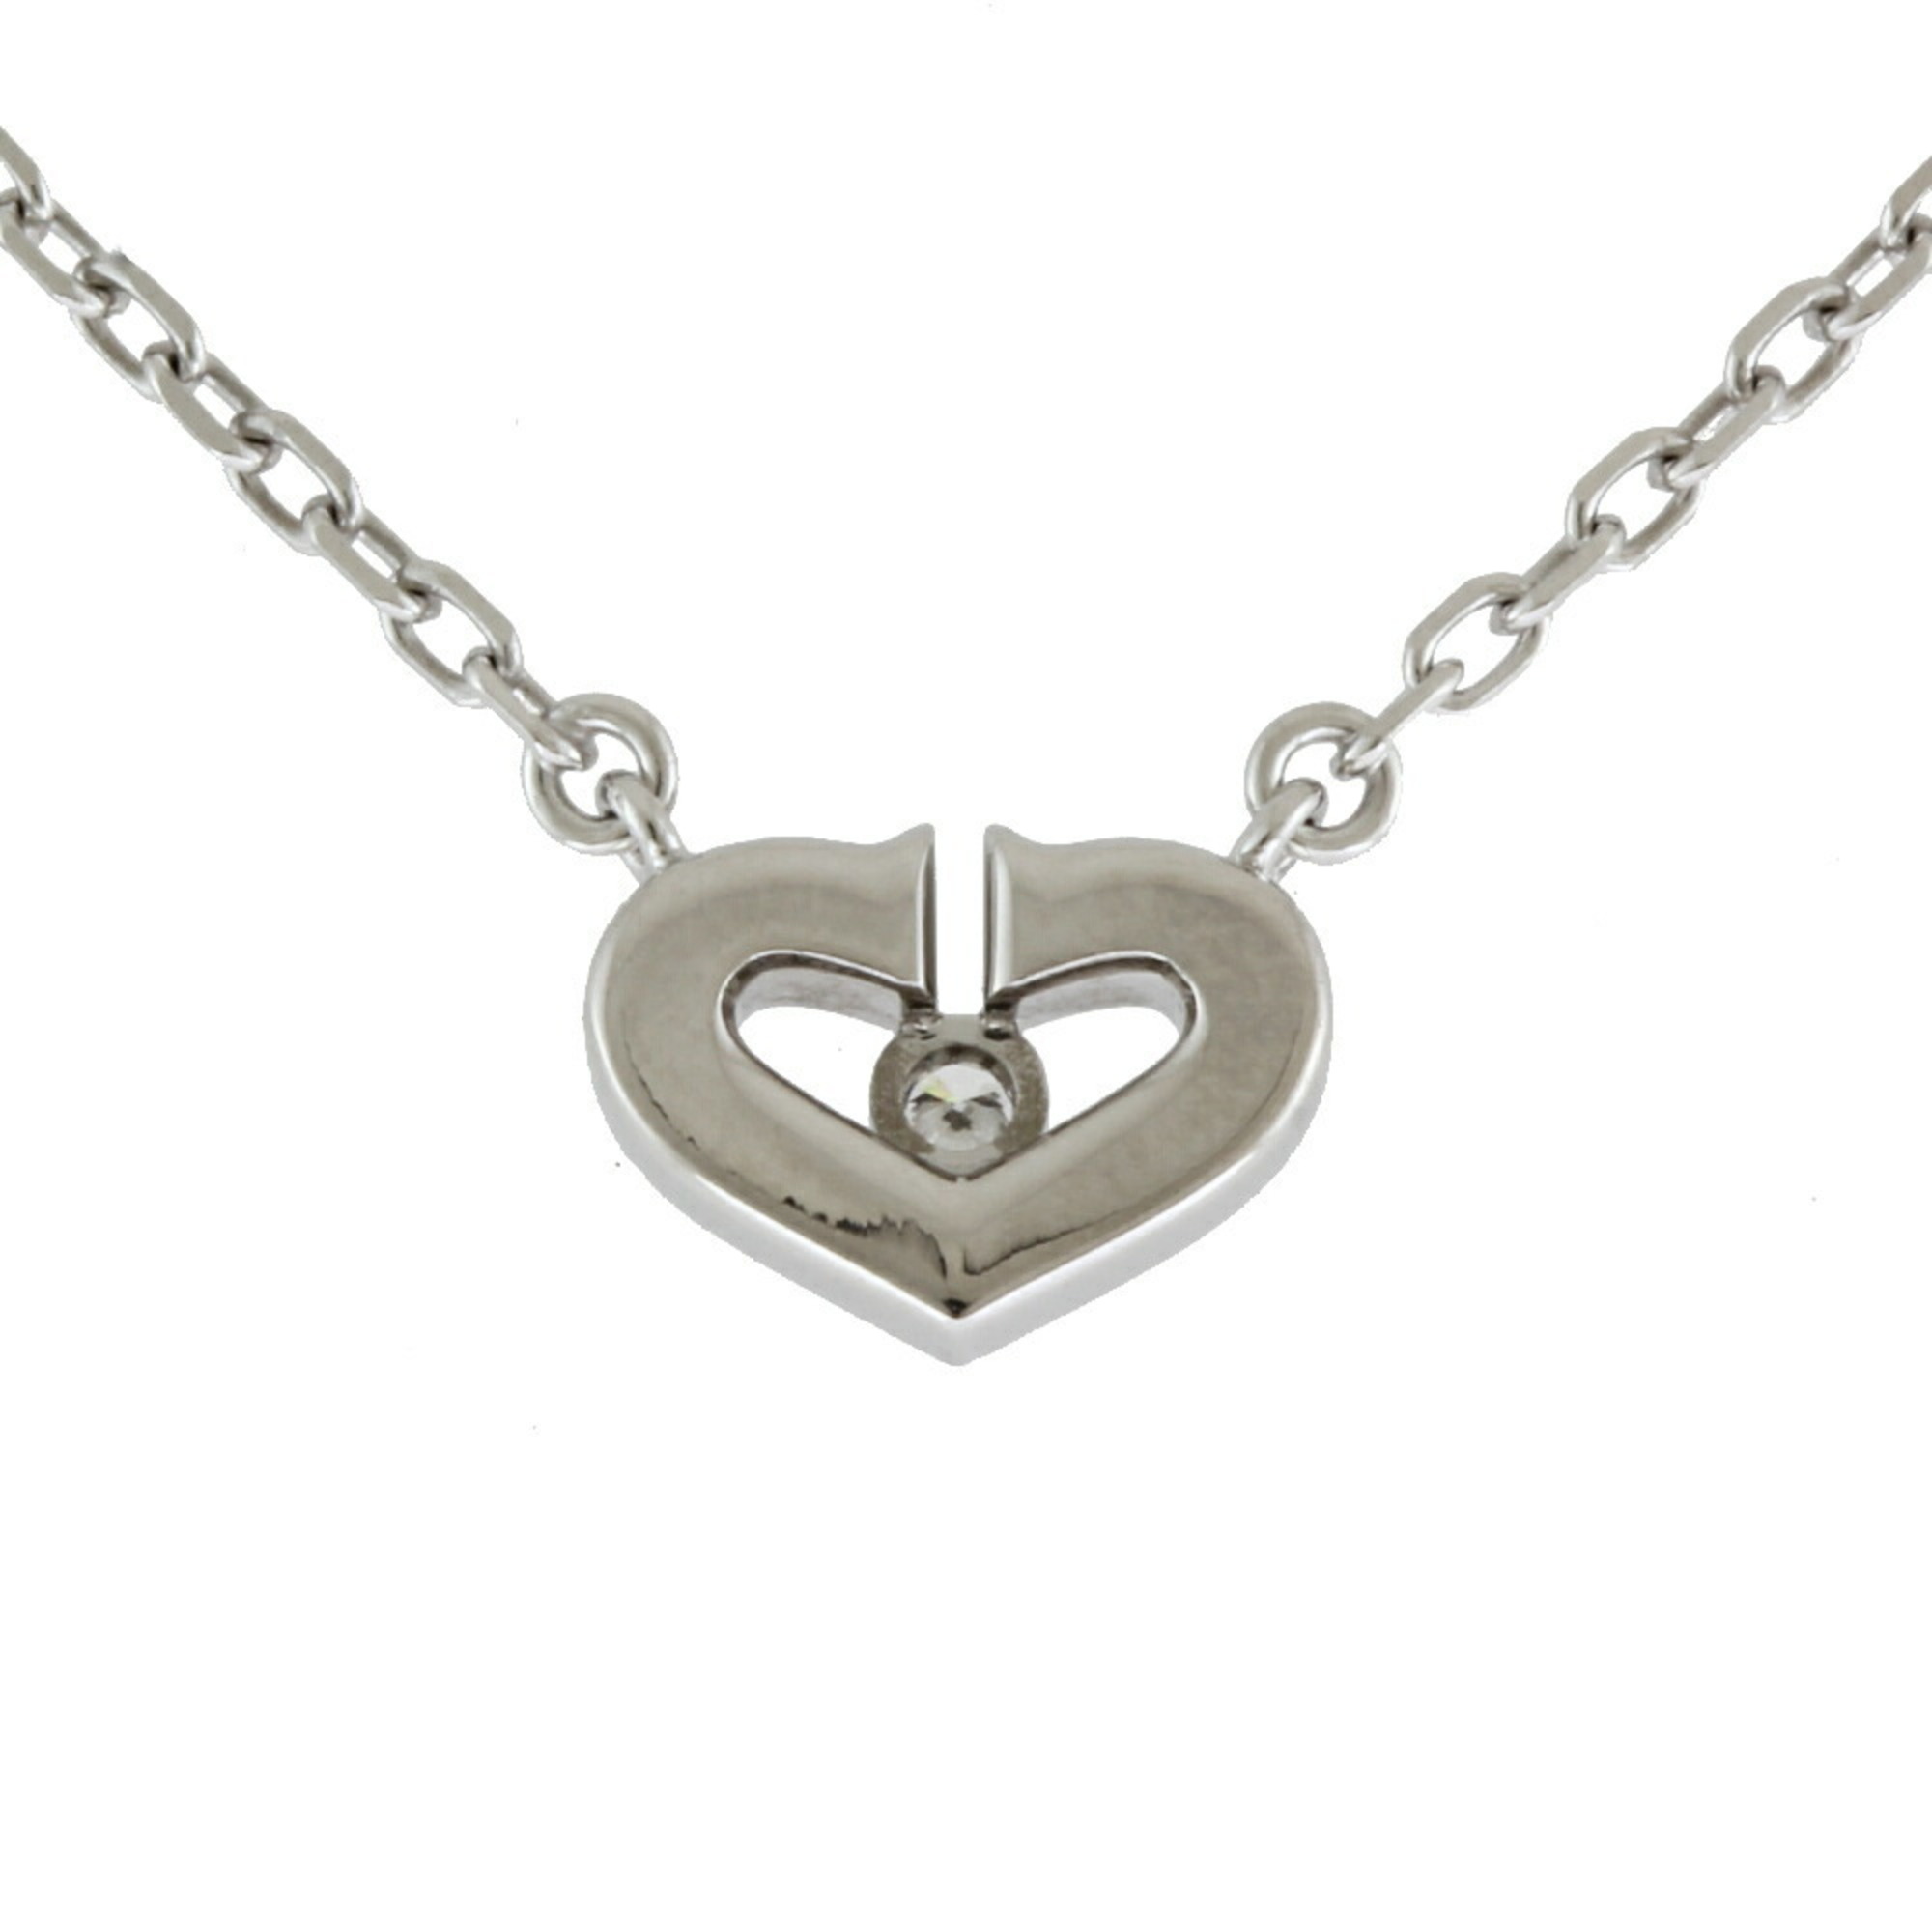 Cartier C Heart Diamond Necklace 18K Ladies CARTIER BRJ10000000120988